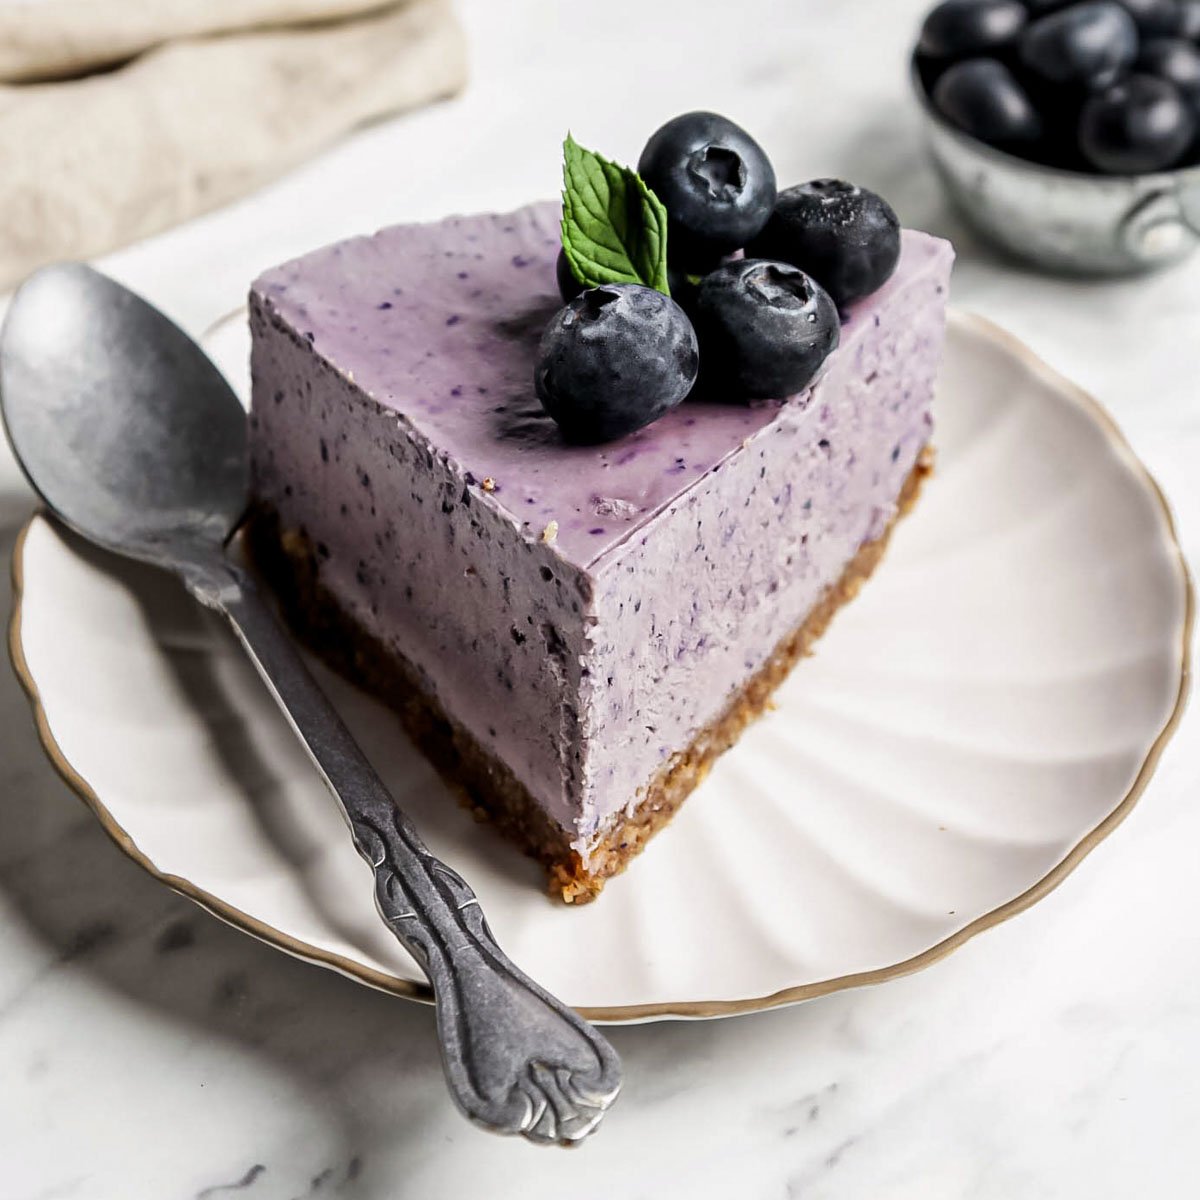 Blueberry cheesecake recipe